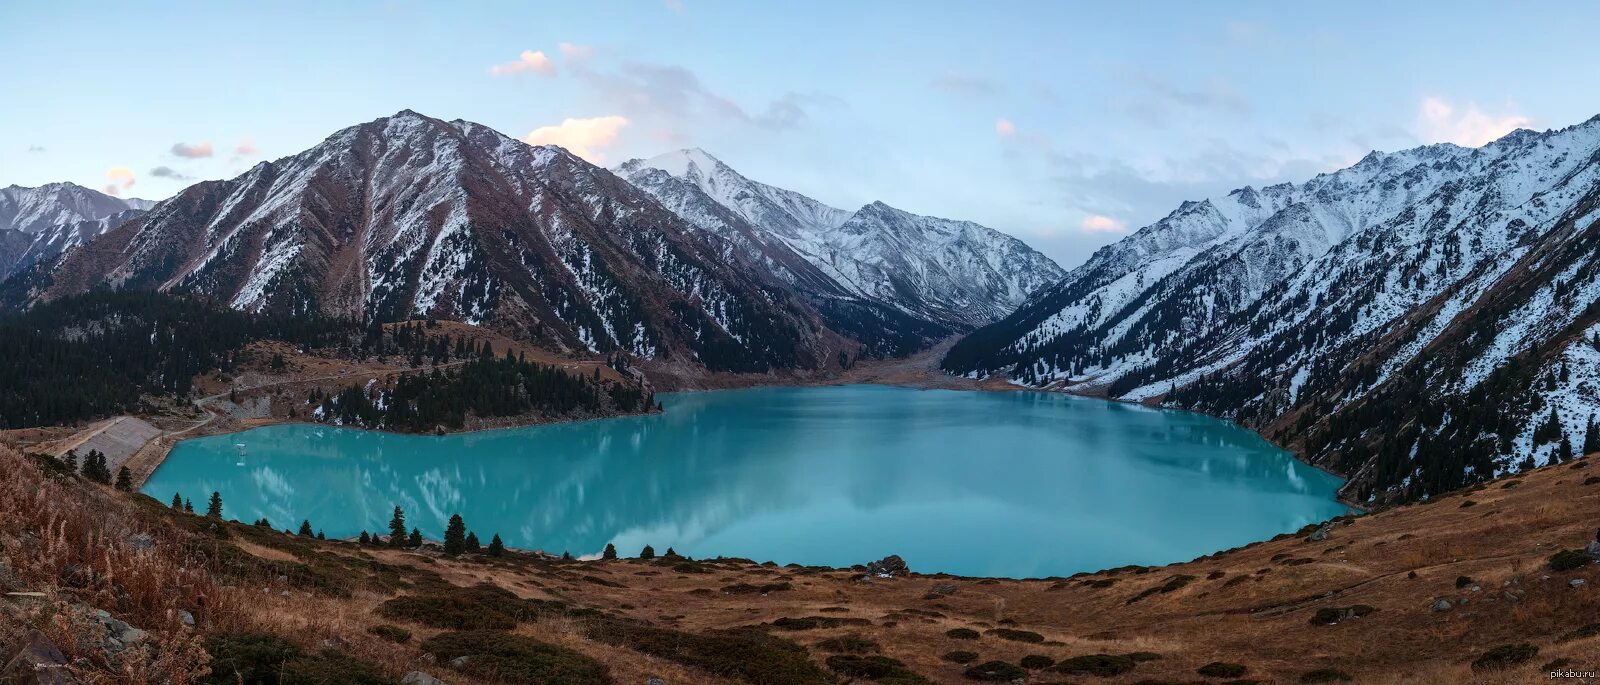 Kazakh videos. Озеро Алатау. Кунгей Алатау. Озера Кунгей-Алатау. Аканское озеро Казахстан.